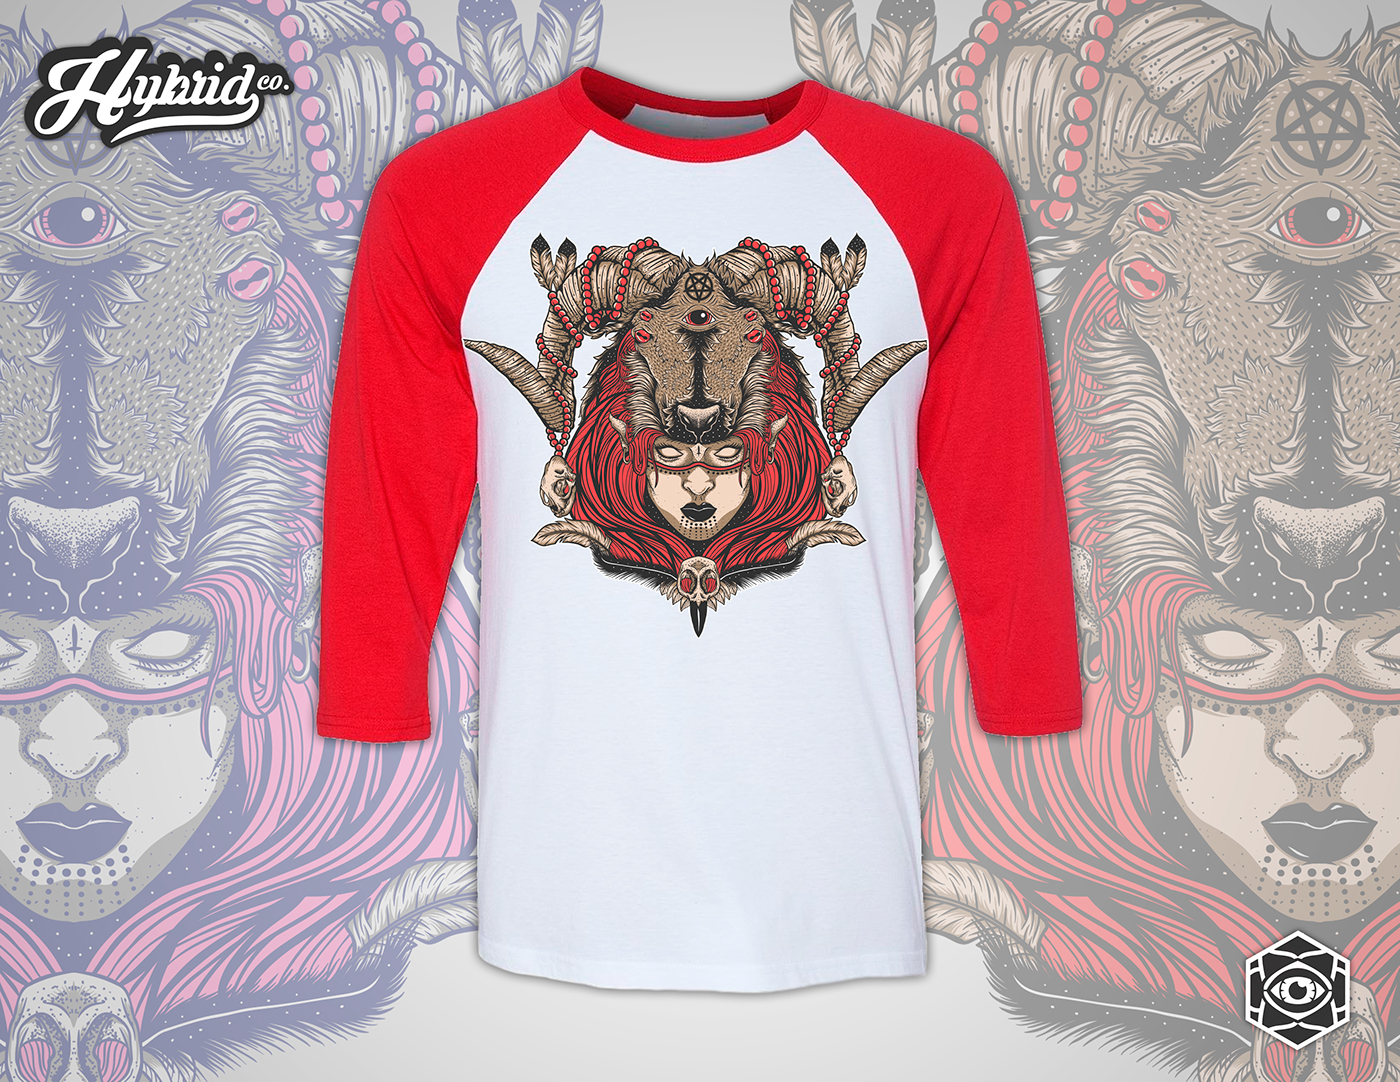 t-shirt SILK silk screen printing print animal Pizza anubis witch bat tee lion stone